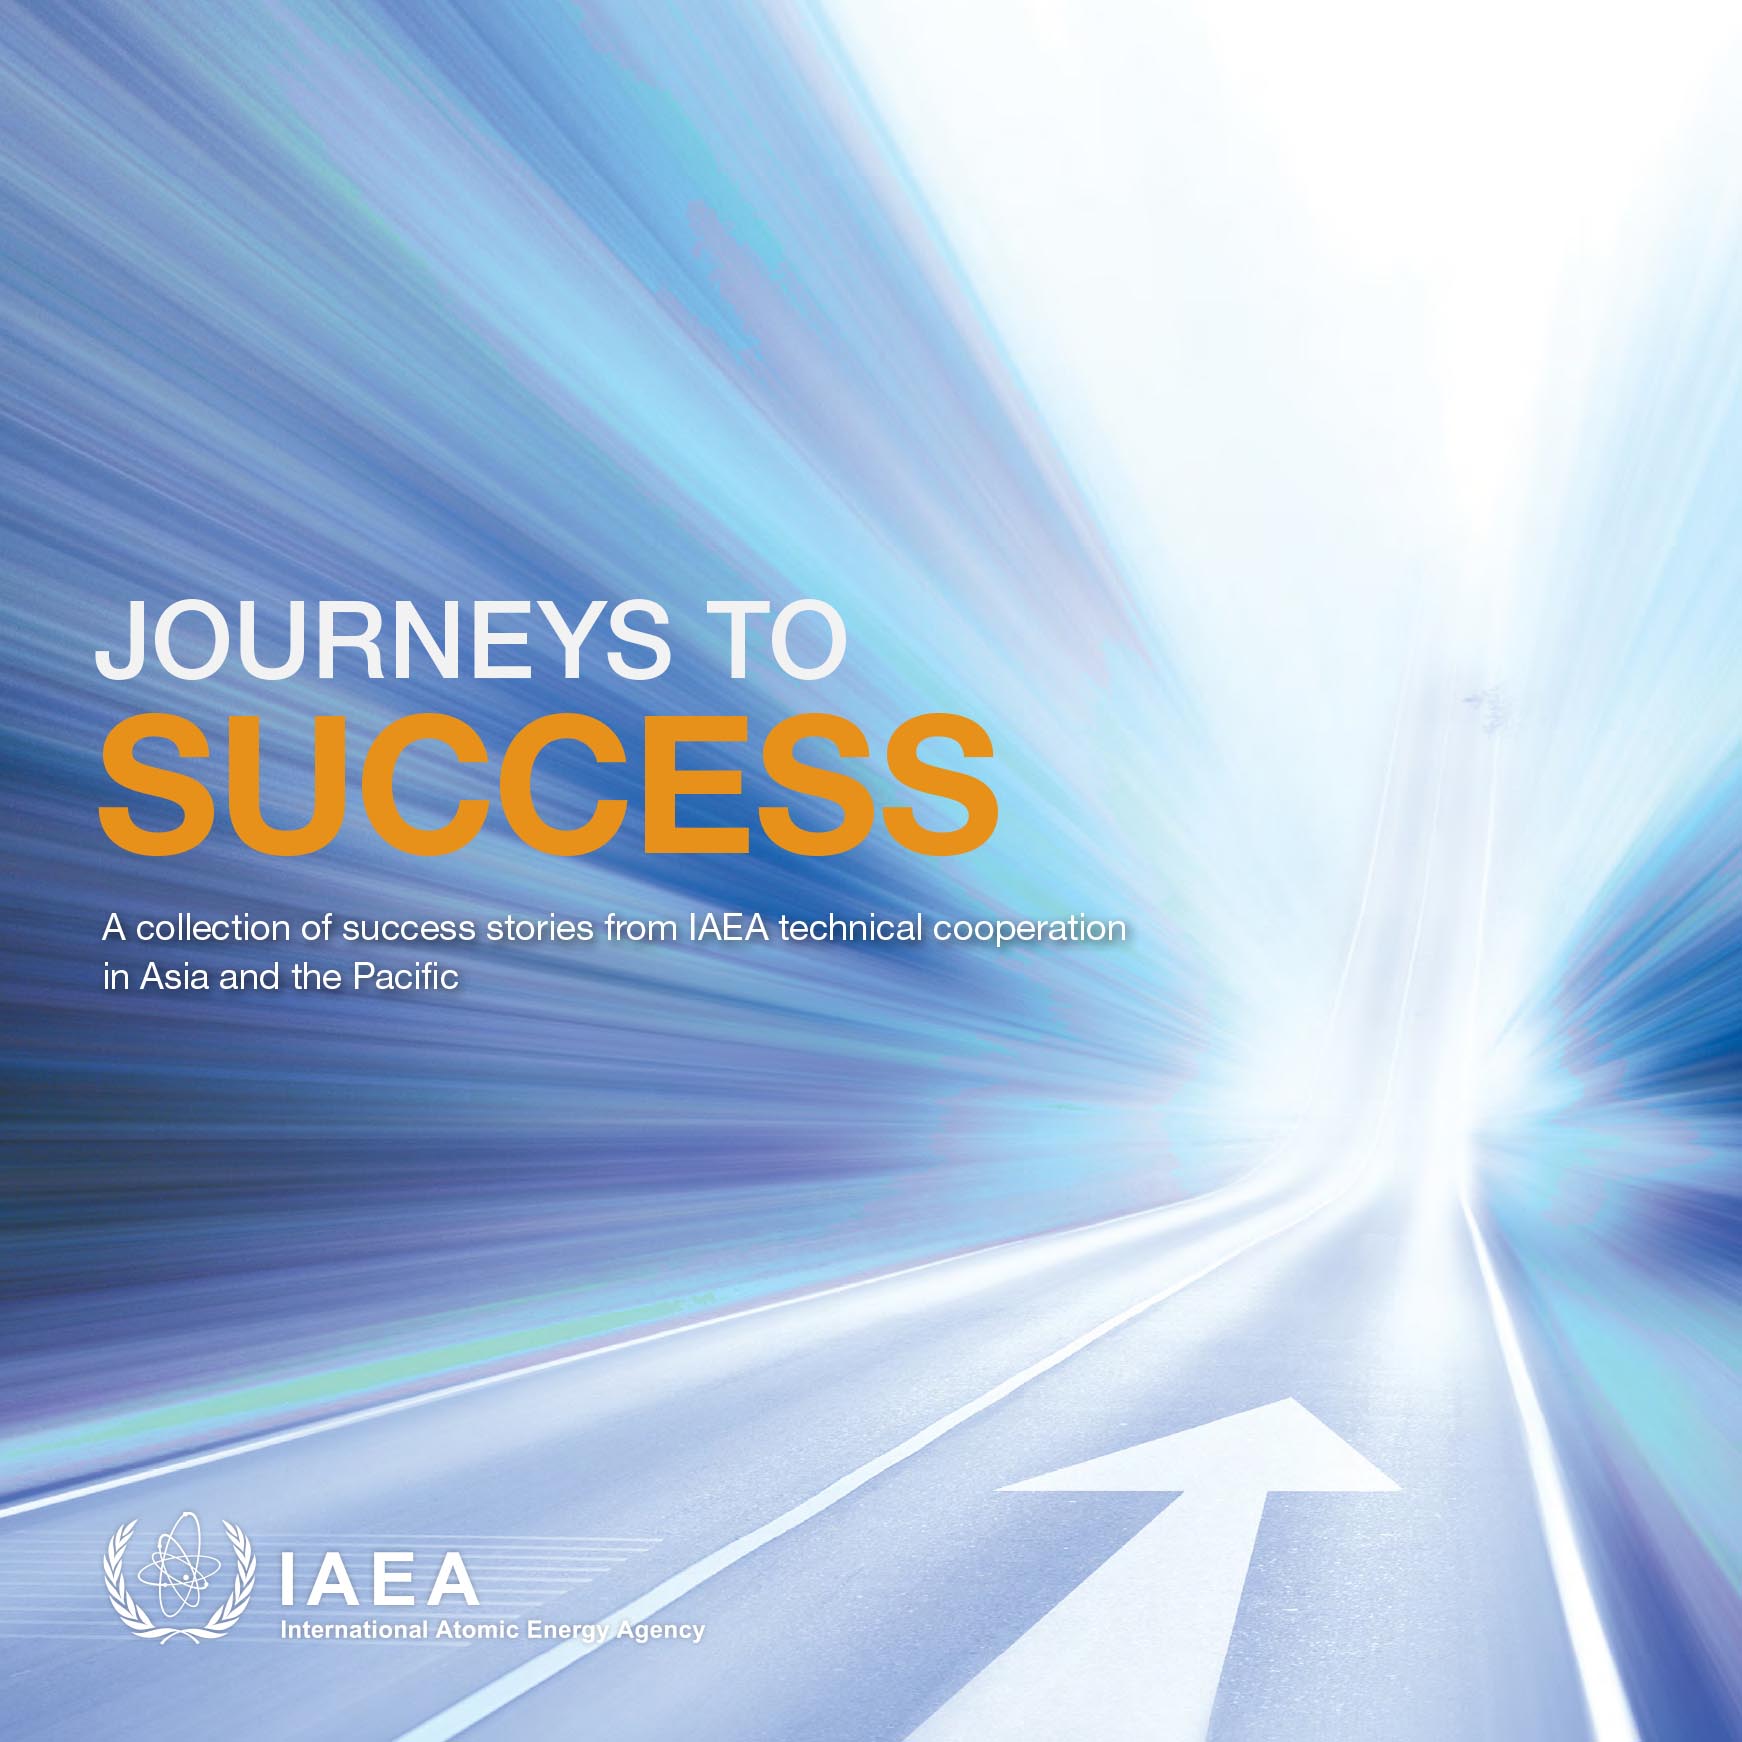 © IAEA 2020: Journey to Success cover image.